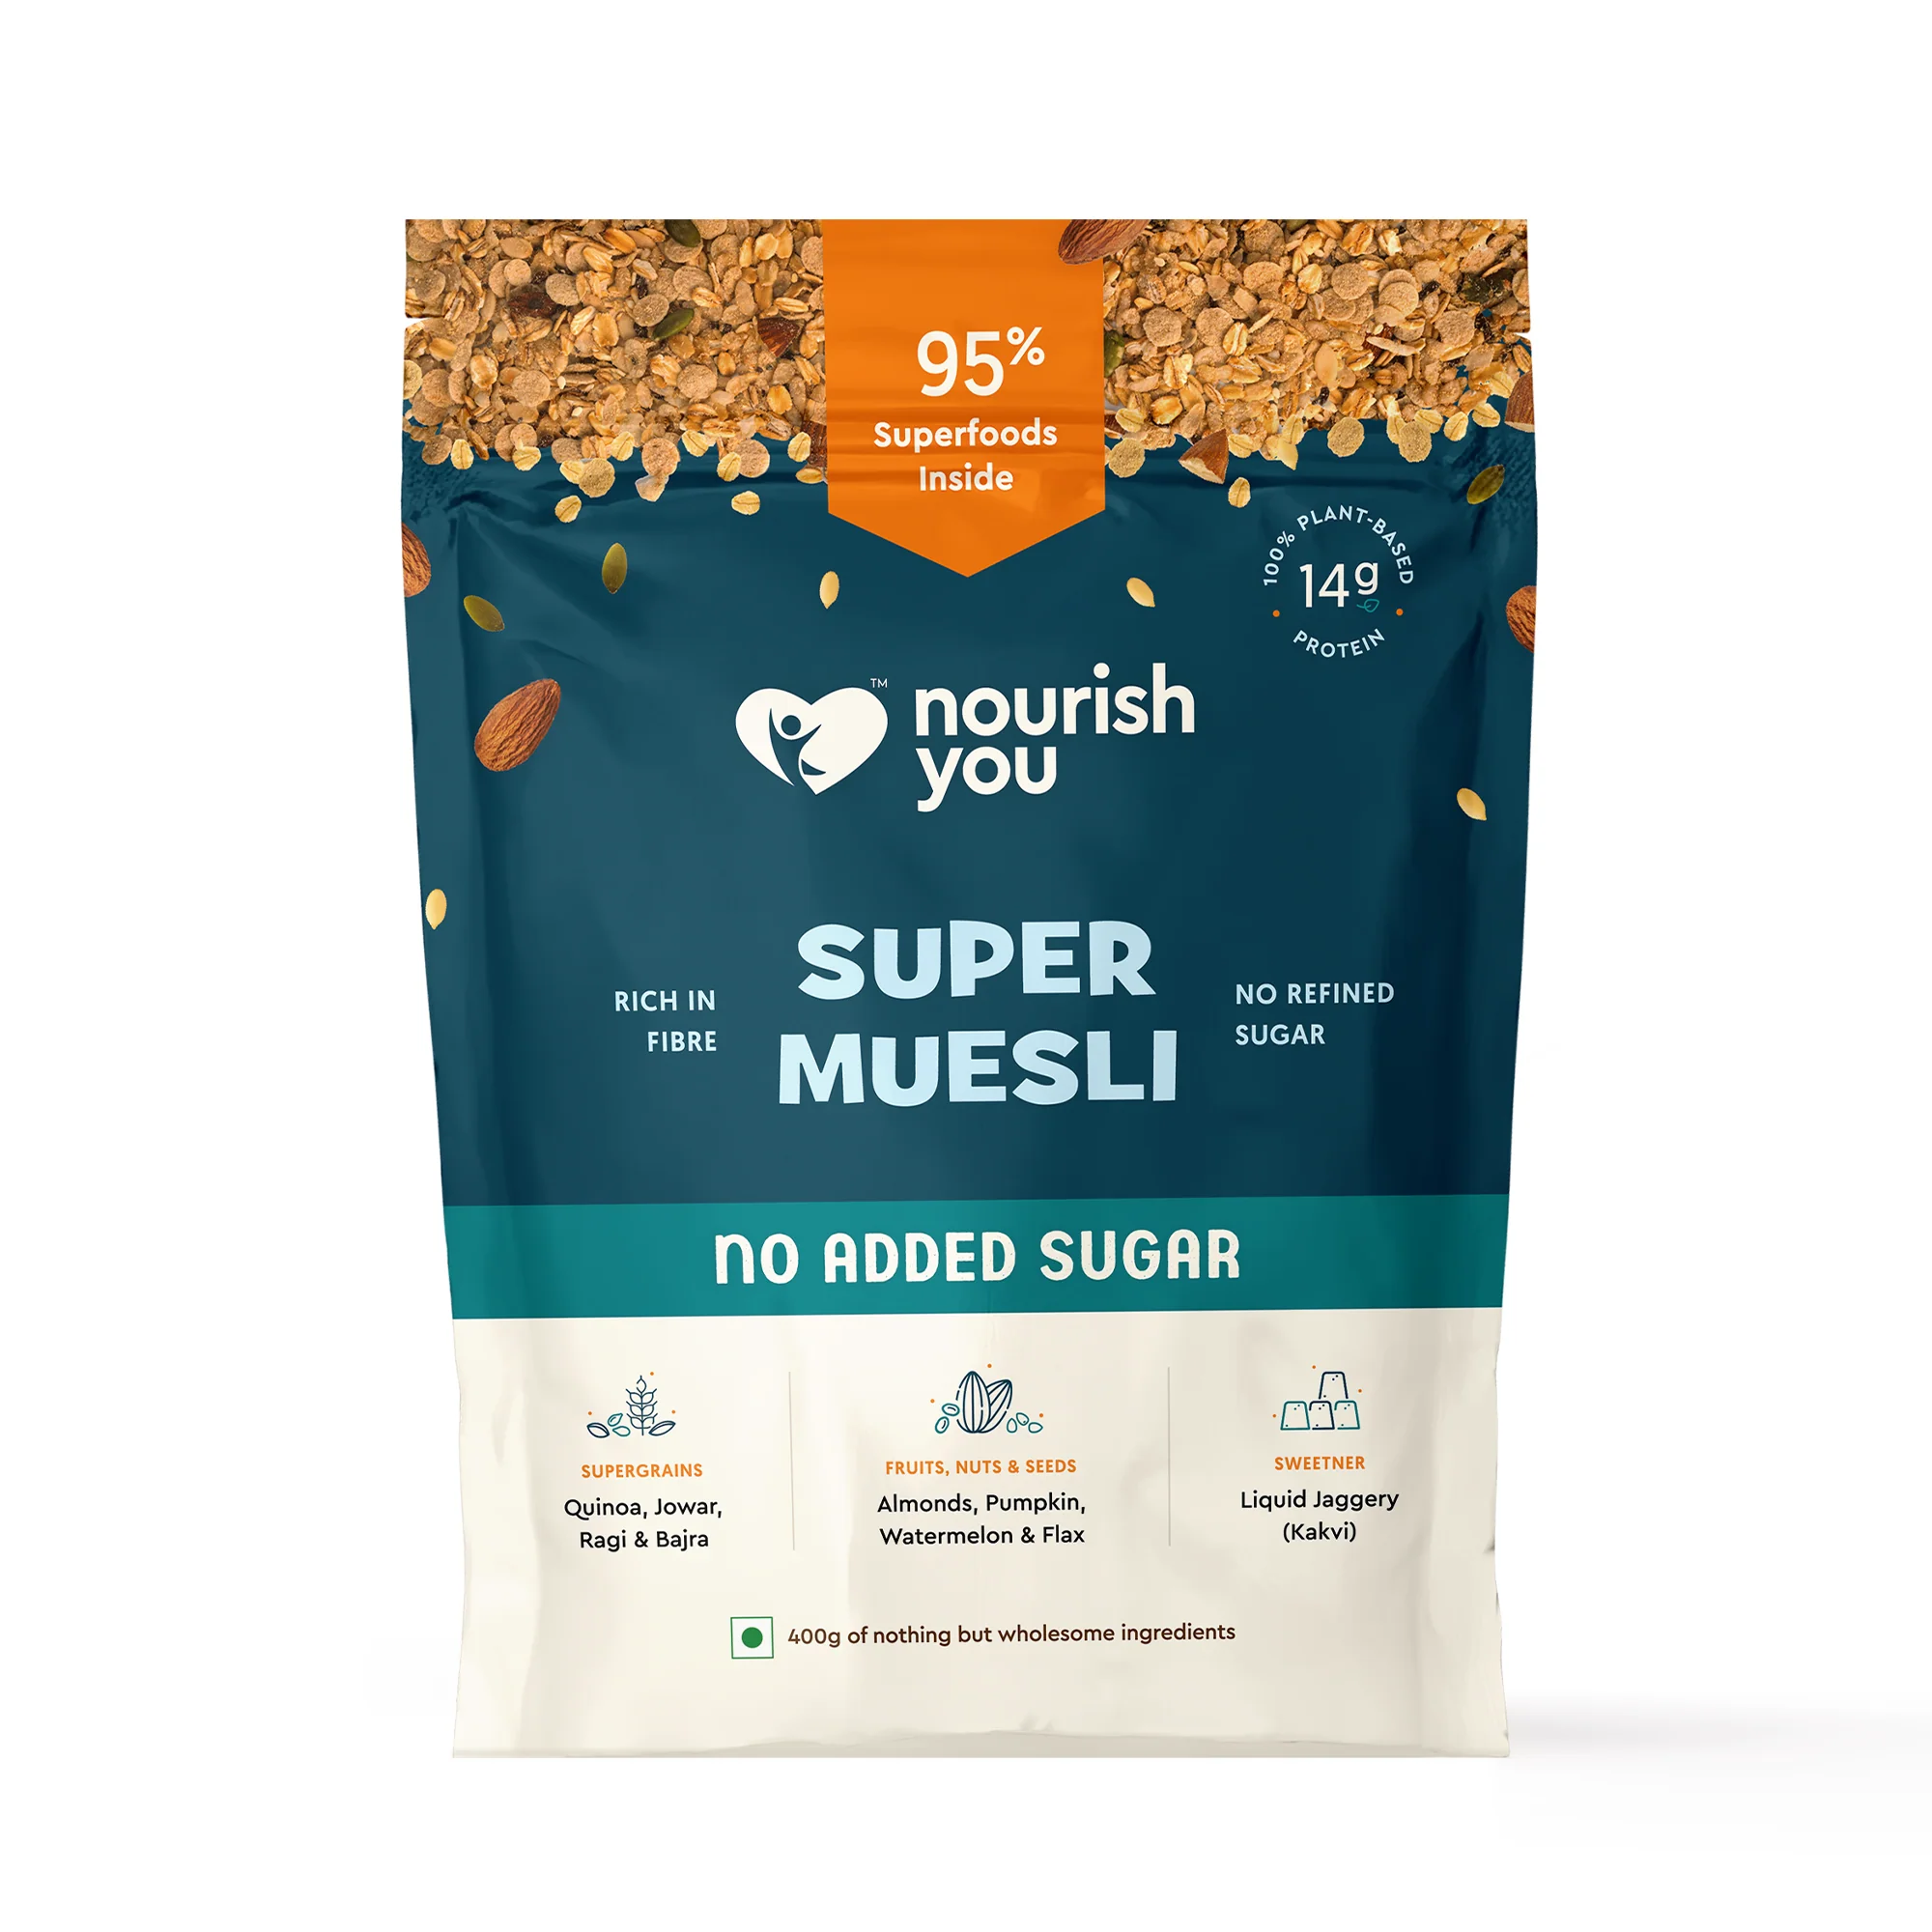 Nourish You Super museli - No added Sugar